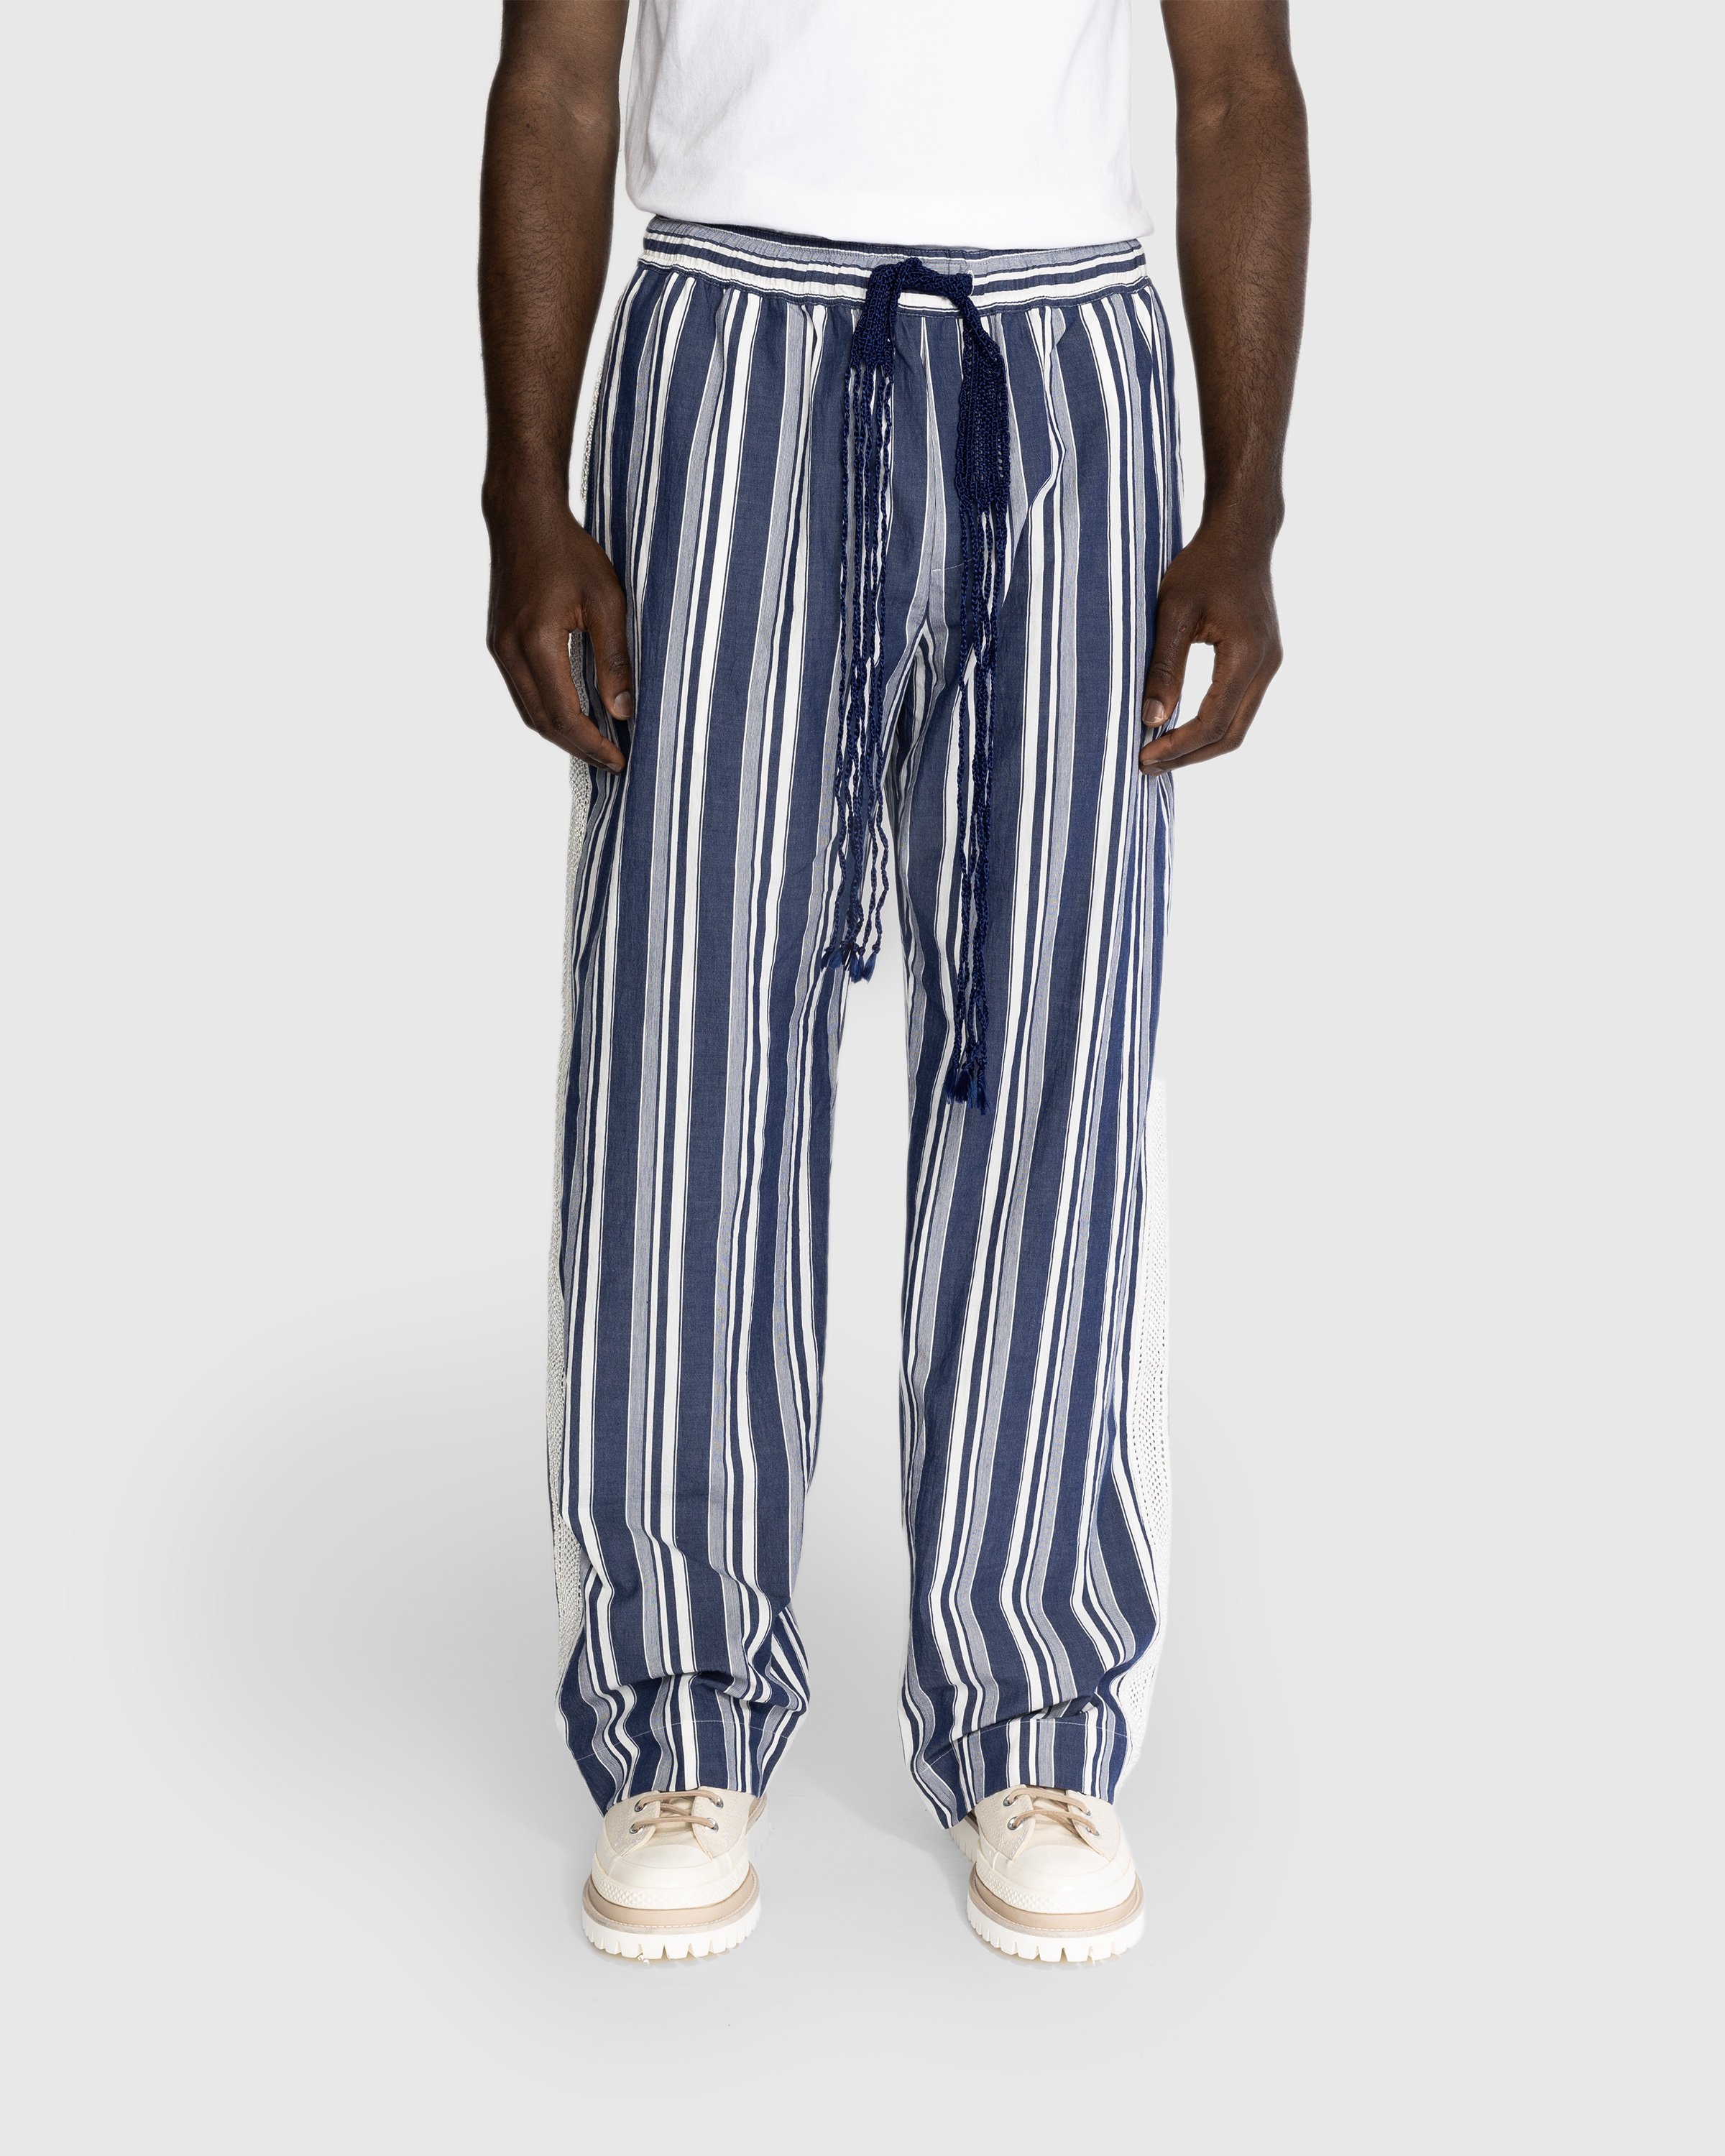 Wales Bonner - Soul Pyjama Trousers - Clothing - Blue - Image 2